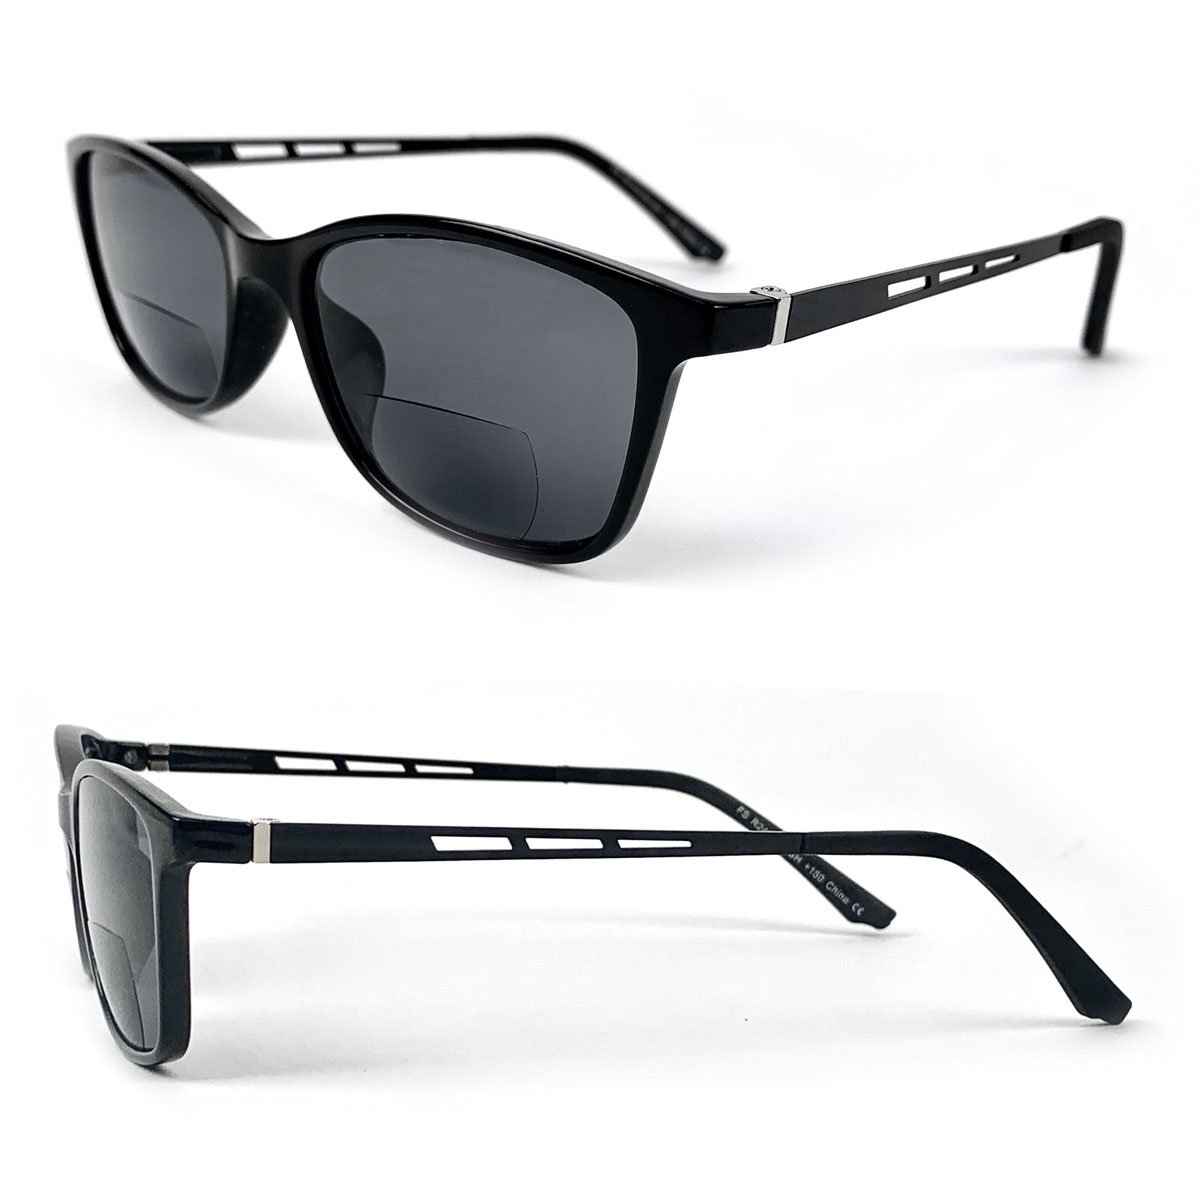 Bifocal Sun Readers Classic Frame Geek Retro Style Reading Sunglasses - Black, +1.75